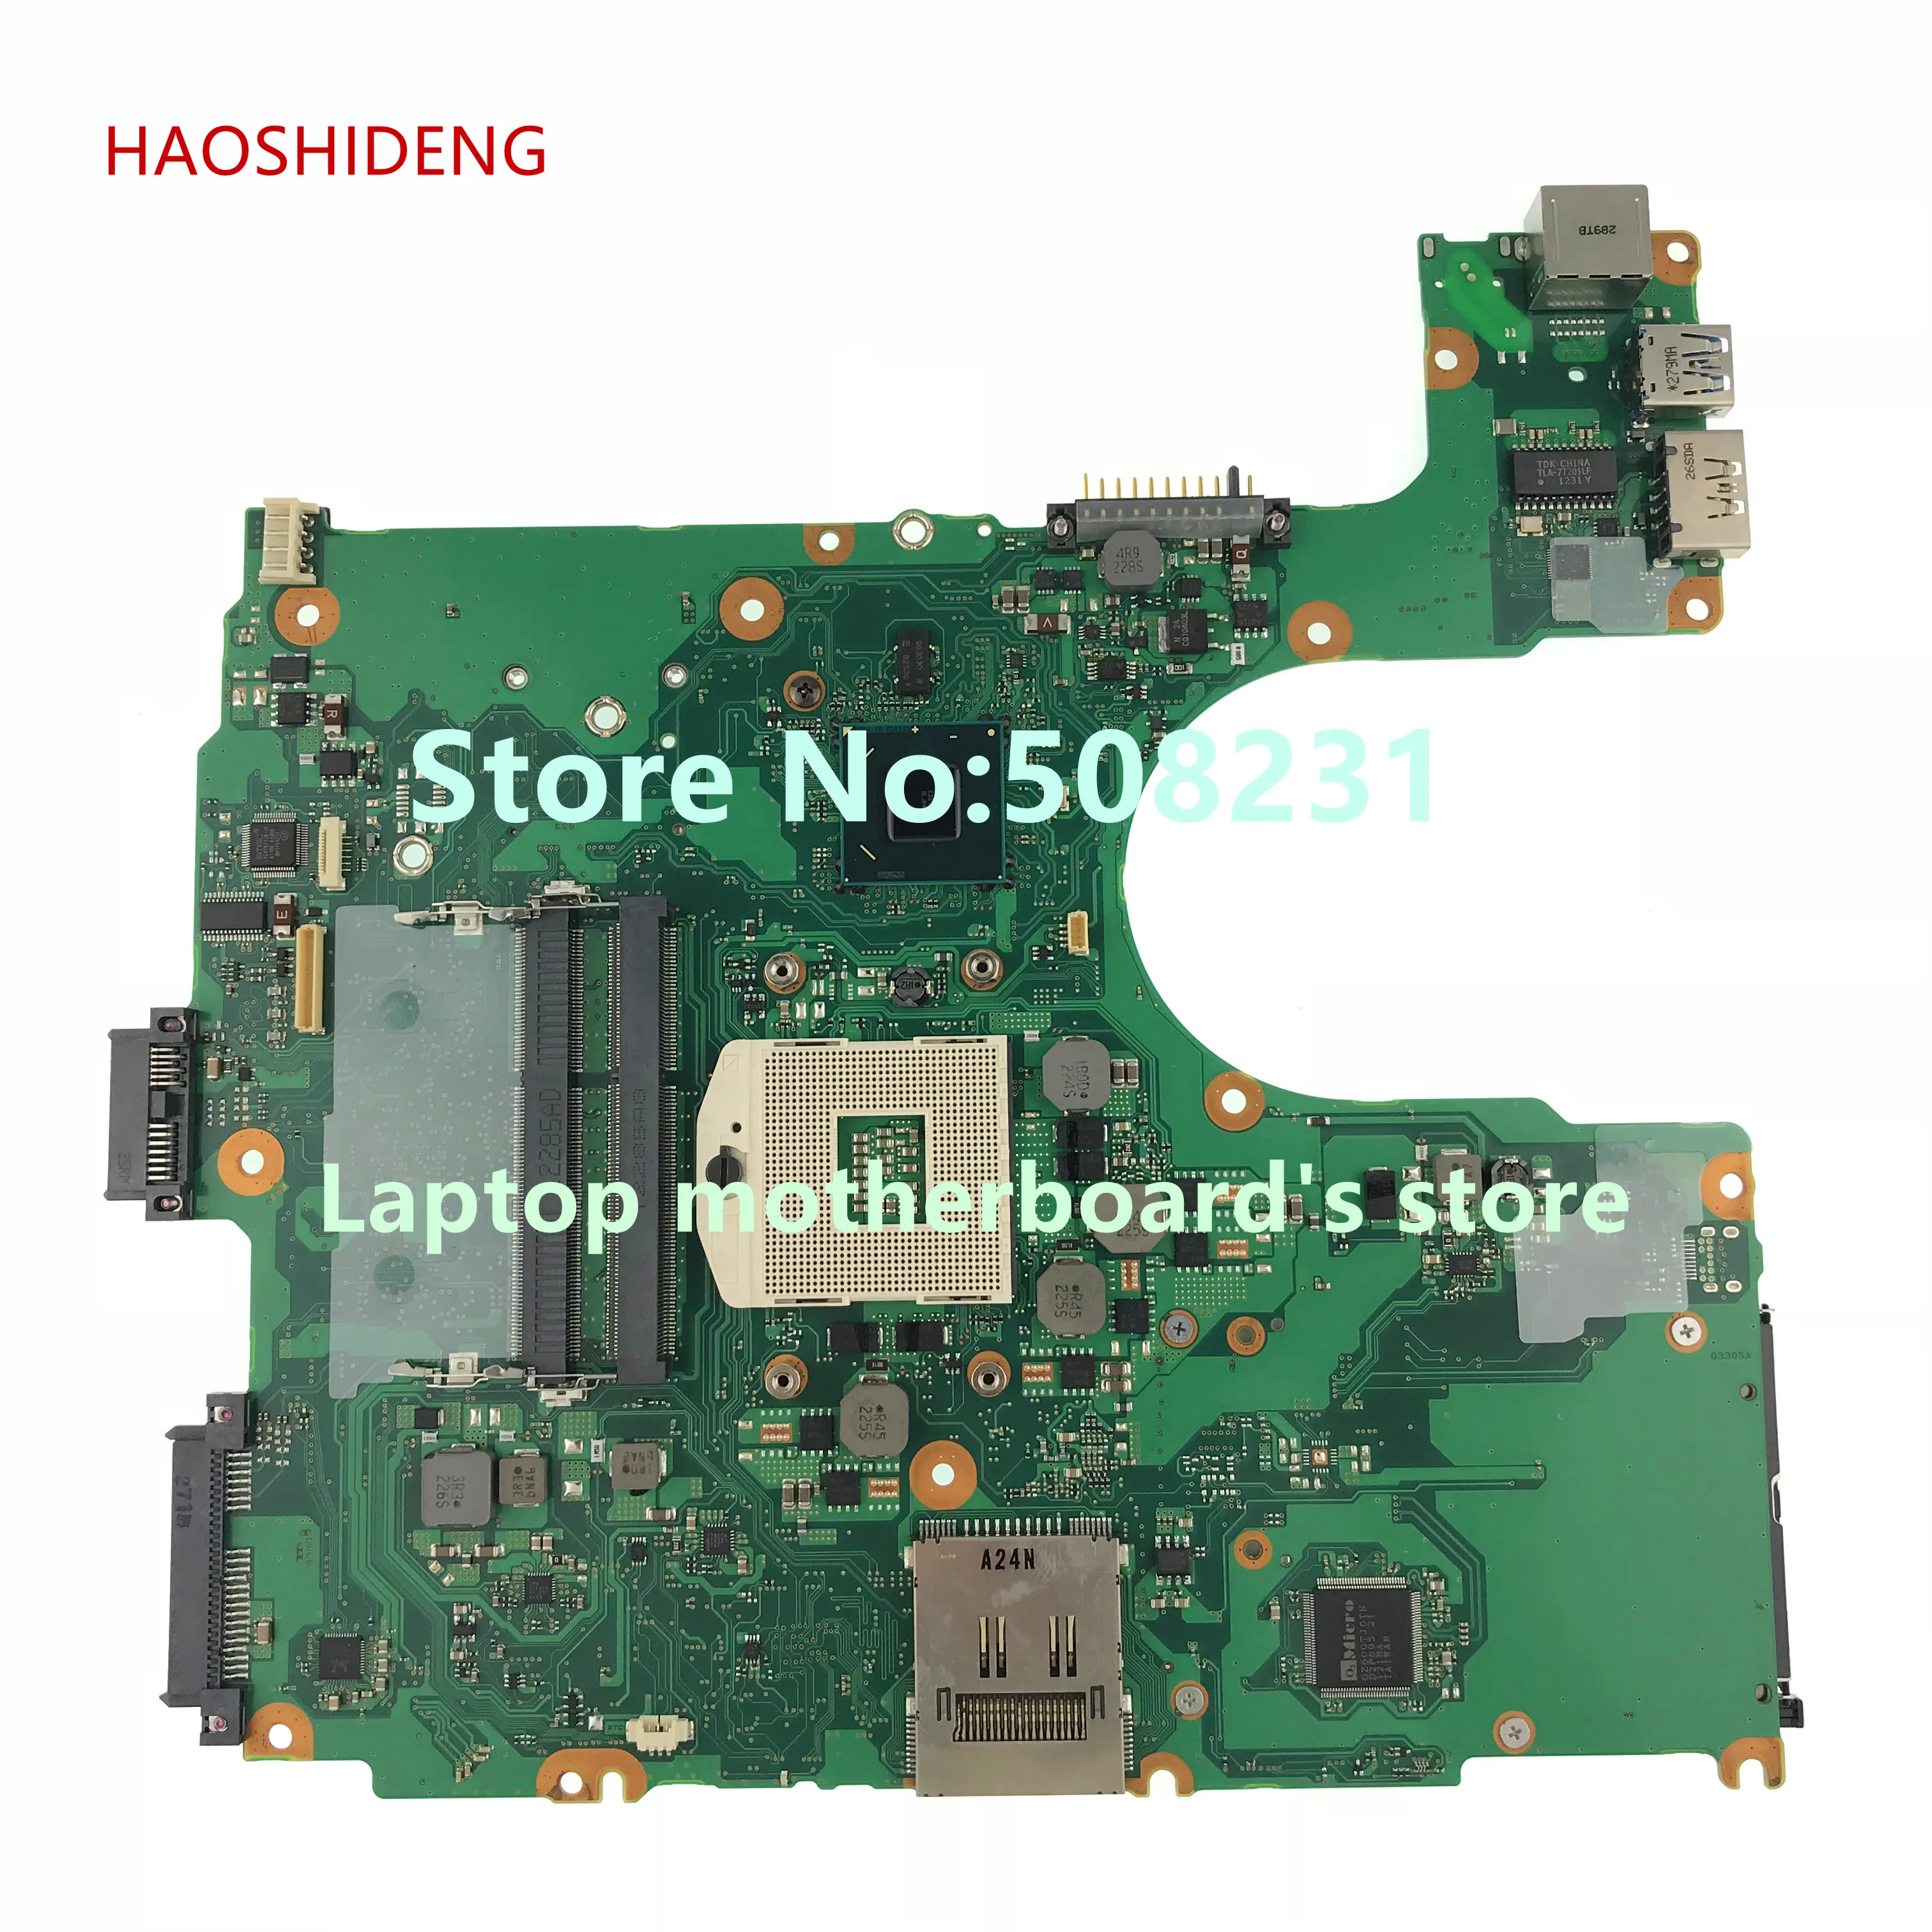 HAOSHIDENG P000550510 mainboard for Toshiba Tecra A11 laptop motherboard A5A003121010 FHRLSY1